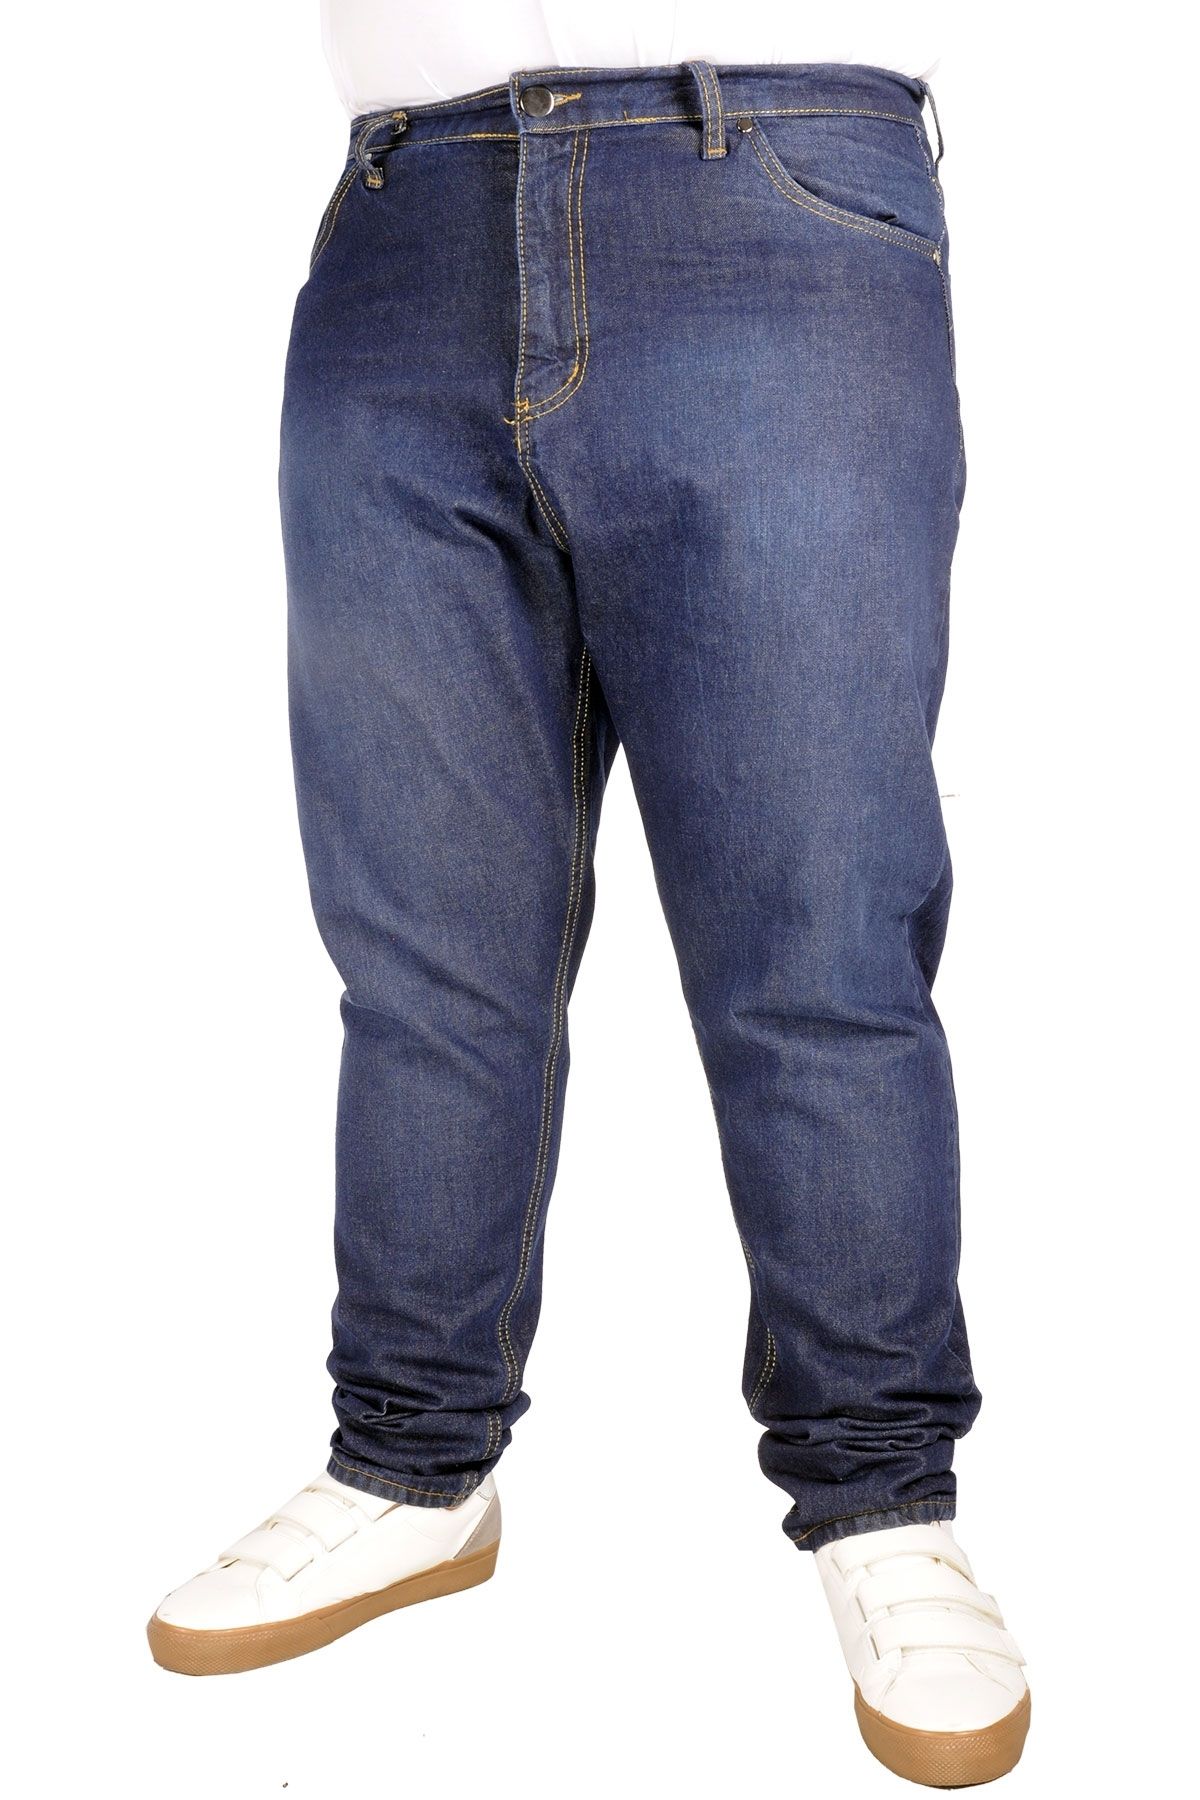 Modexl Mode Xl Büyük Beden Erkek Pantolon Kot 5cep Vertical Lycra 21915 Blue Black